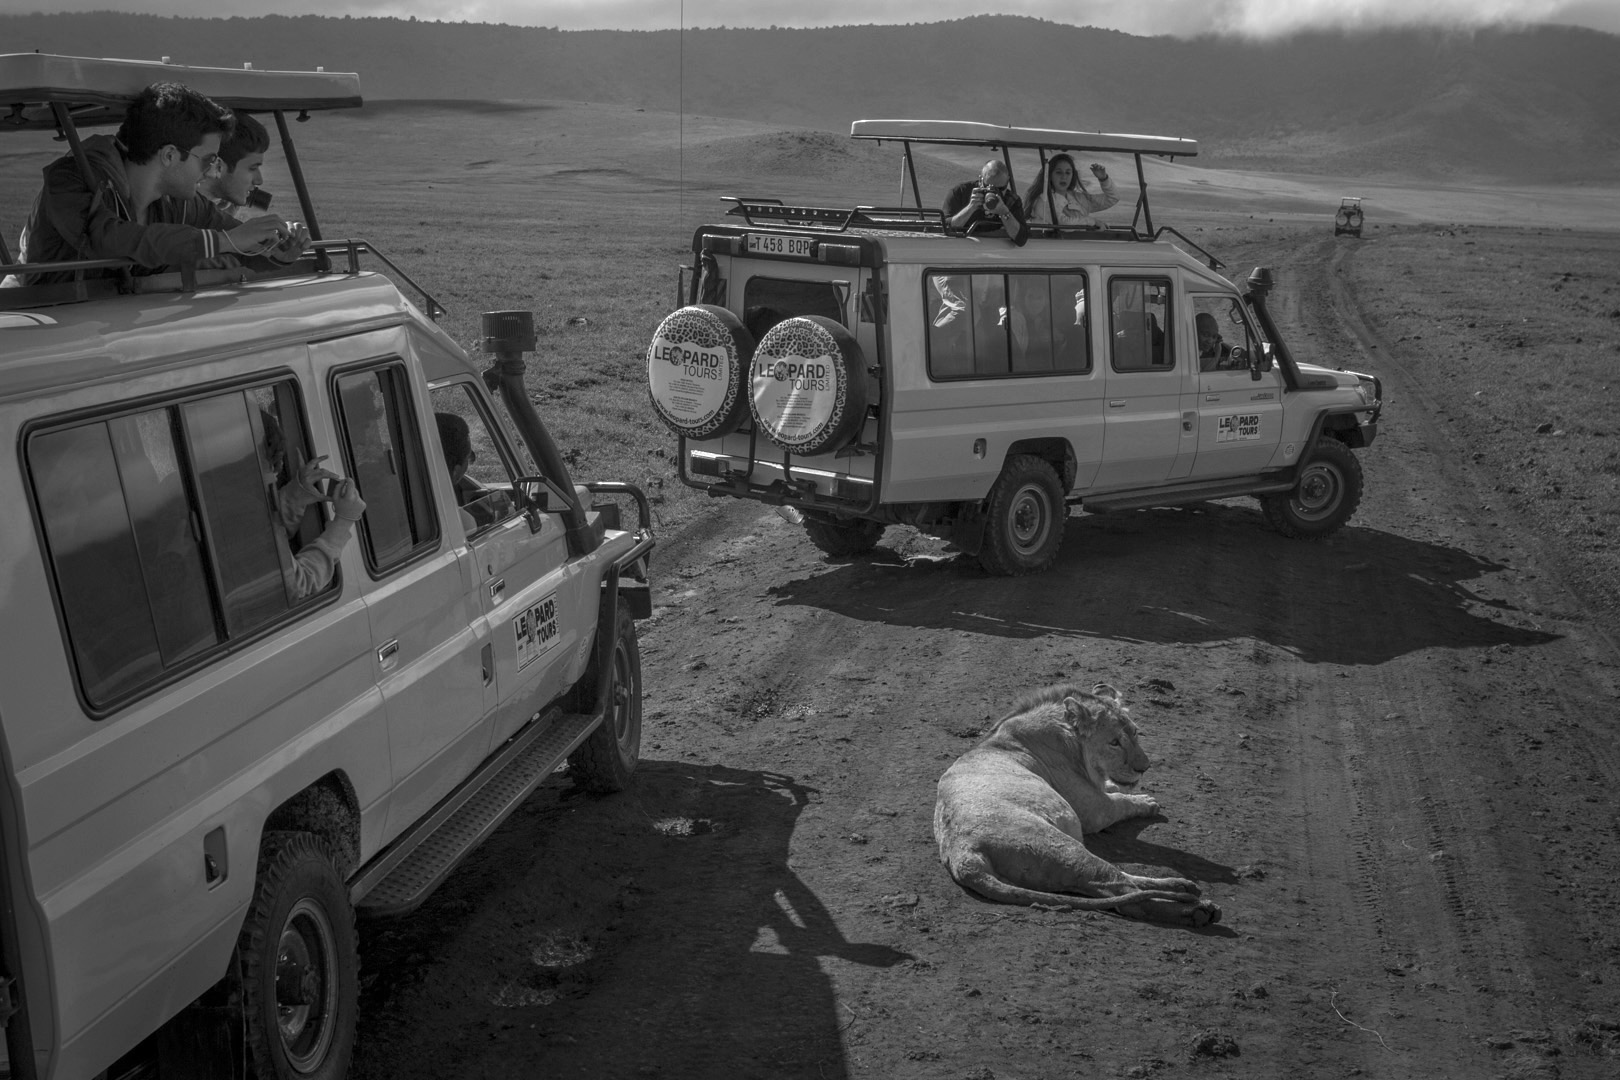  Ngorongoro Crater 